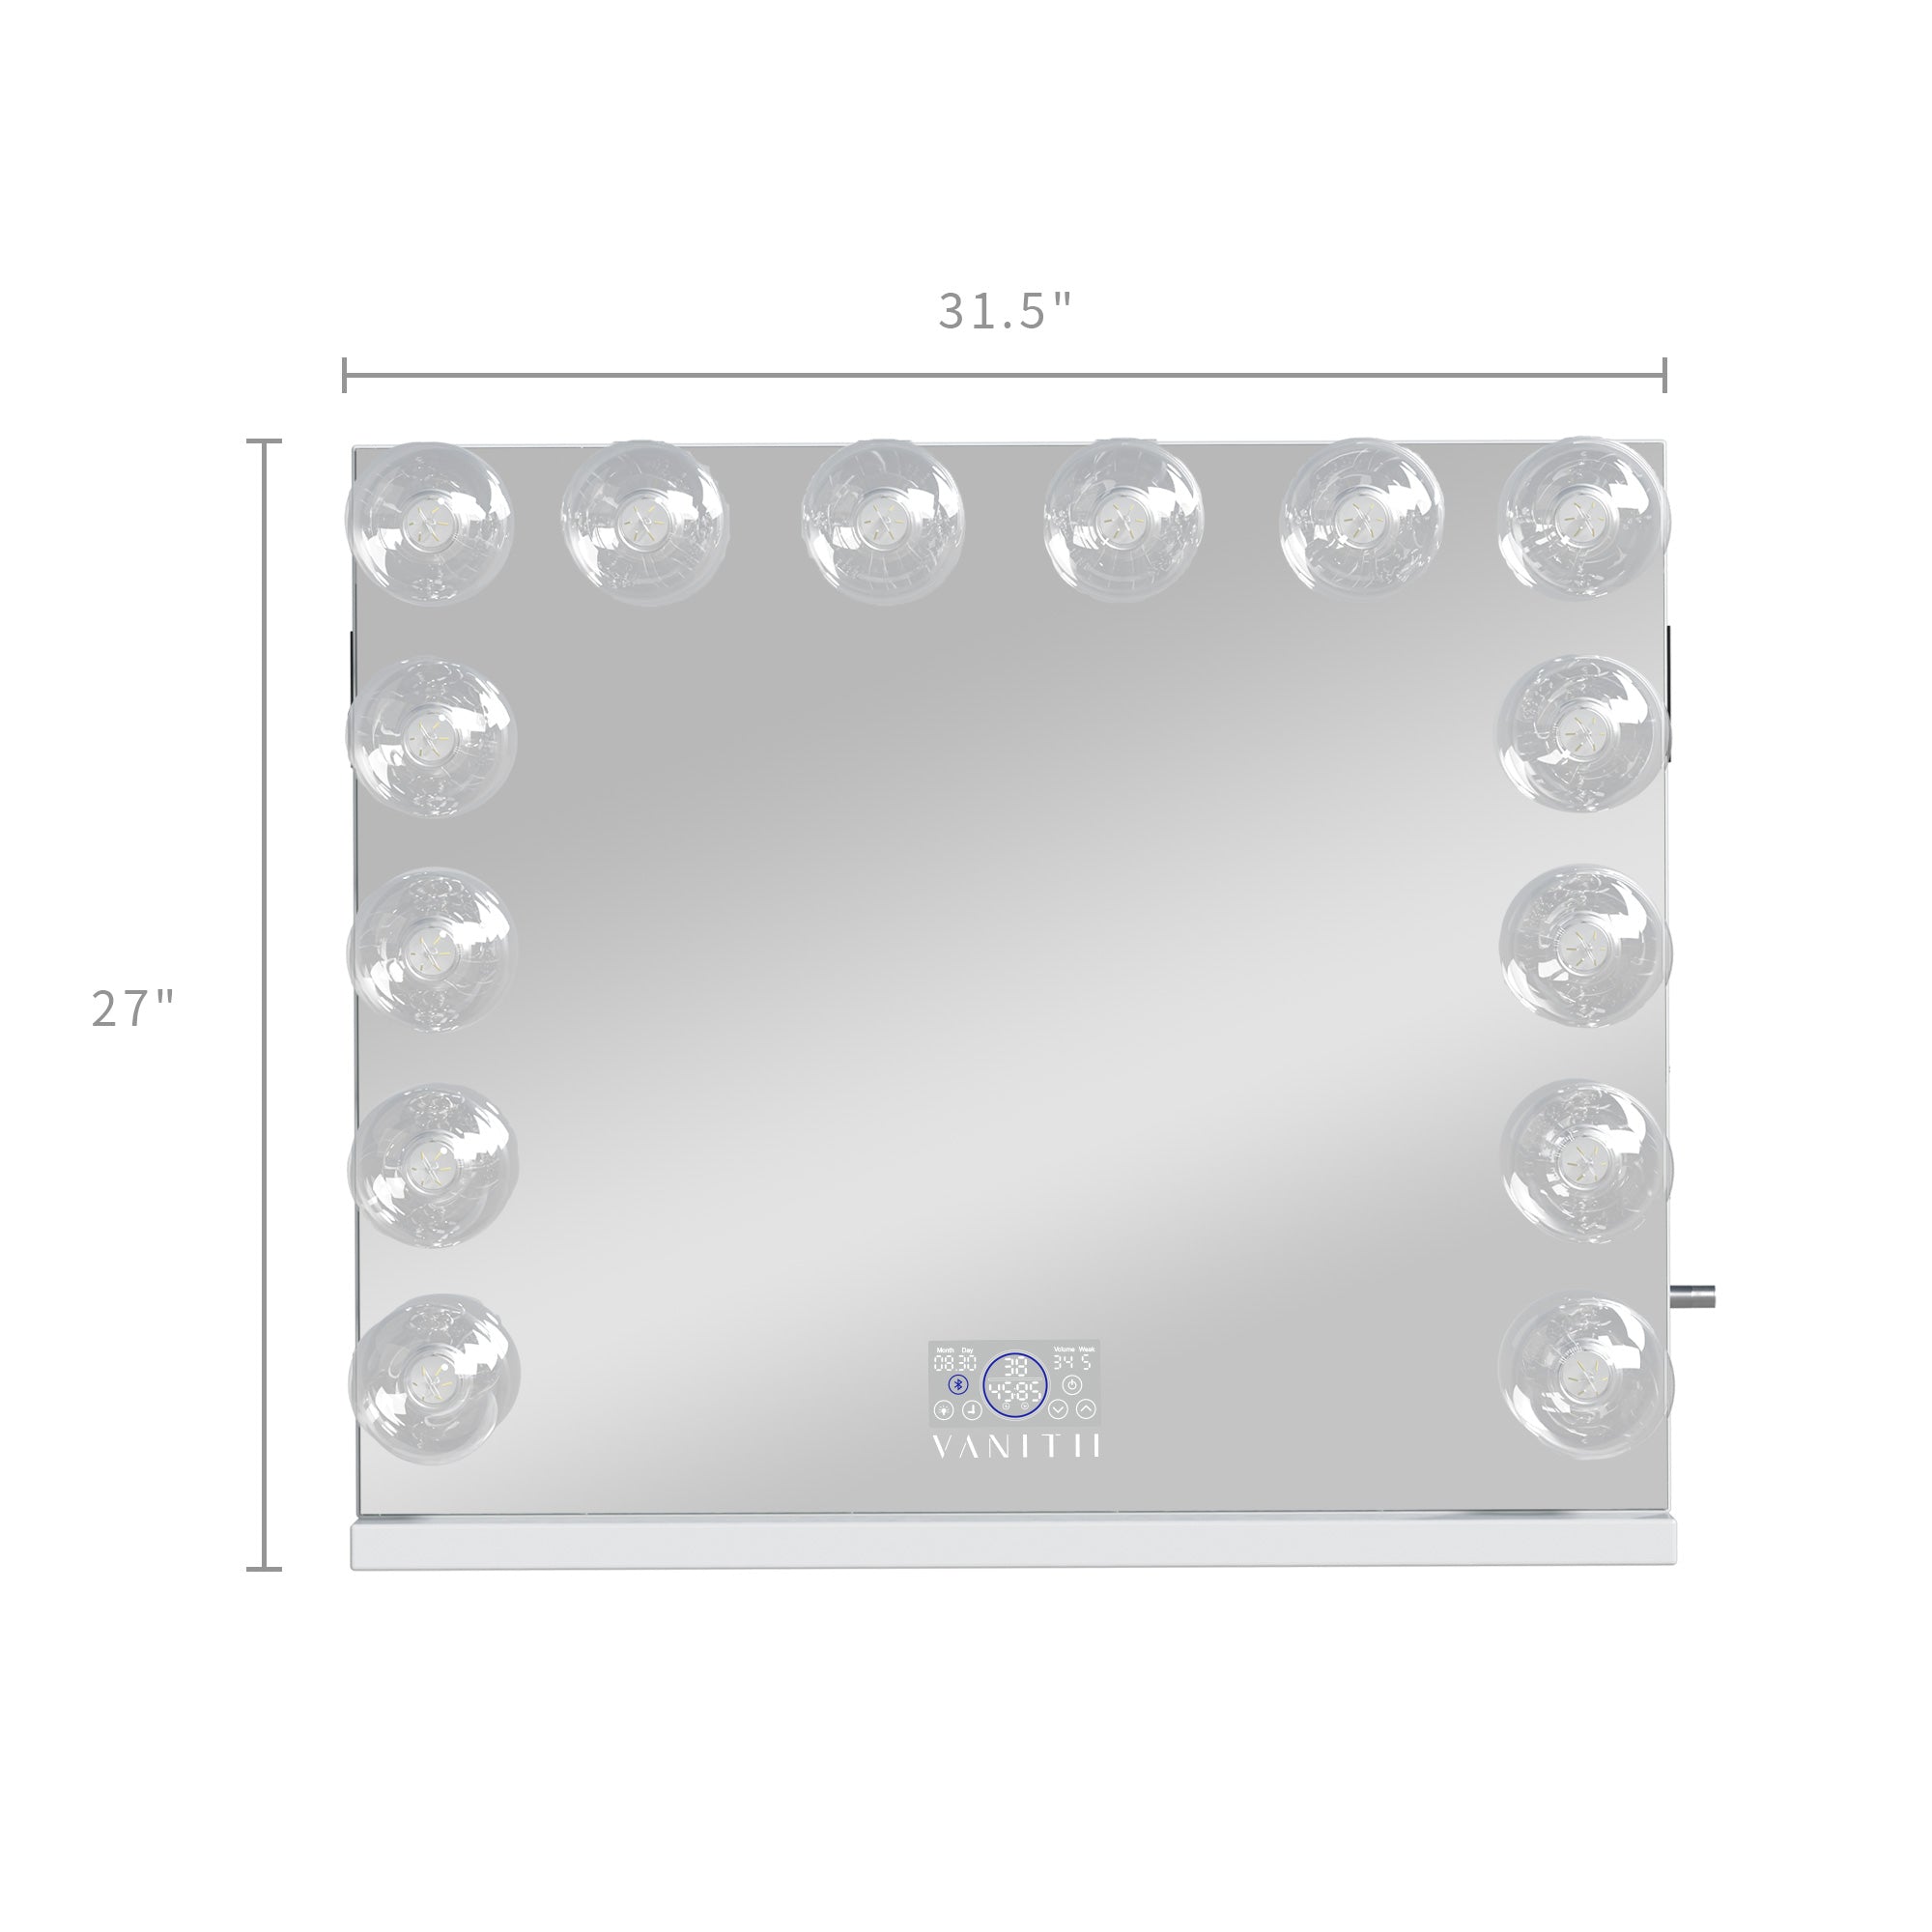 VANITII Marilyn Hollywood Vanity Mirror Pro Max- Tabletop or Wall Mount Vanity Mirror with 14 G95FLM Bulbs